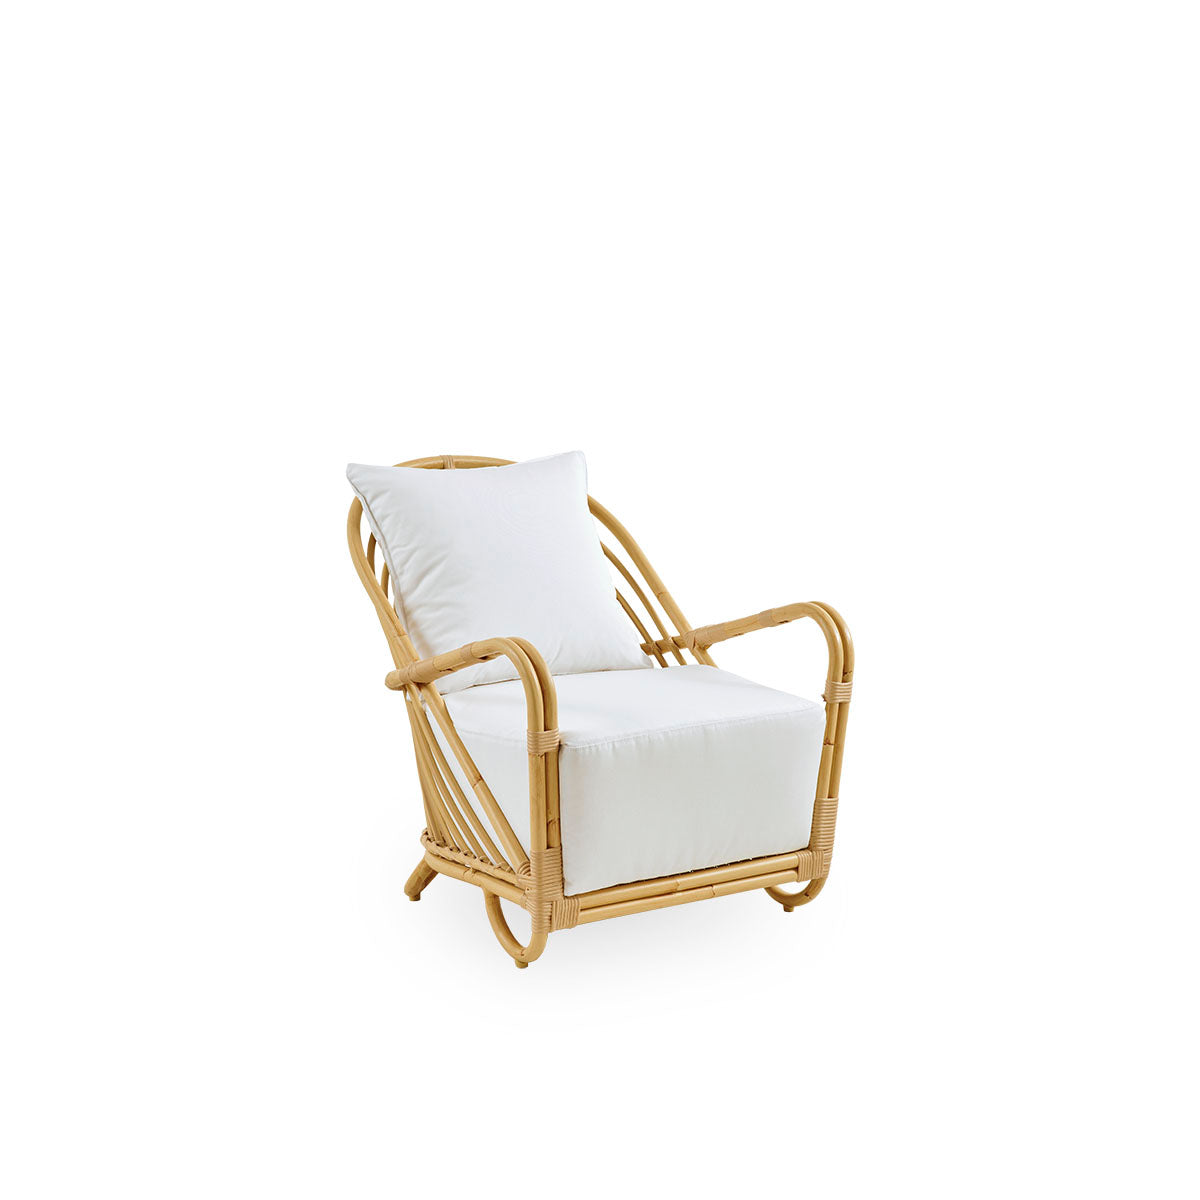 Charlottenborg Exterior Lounge Chair